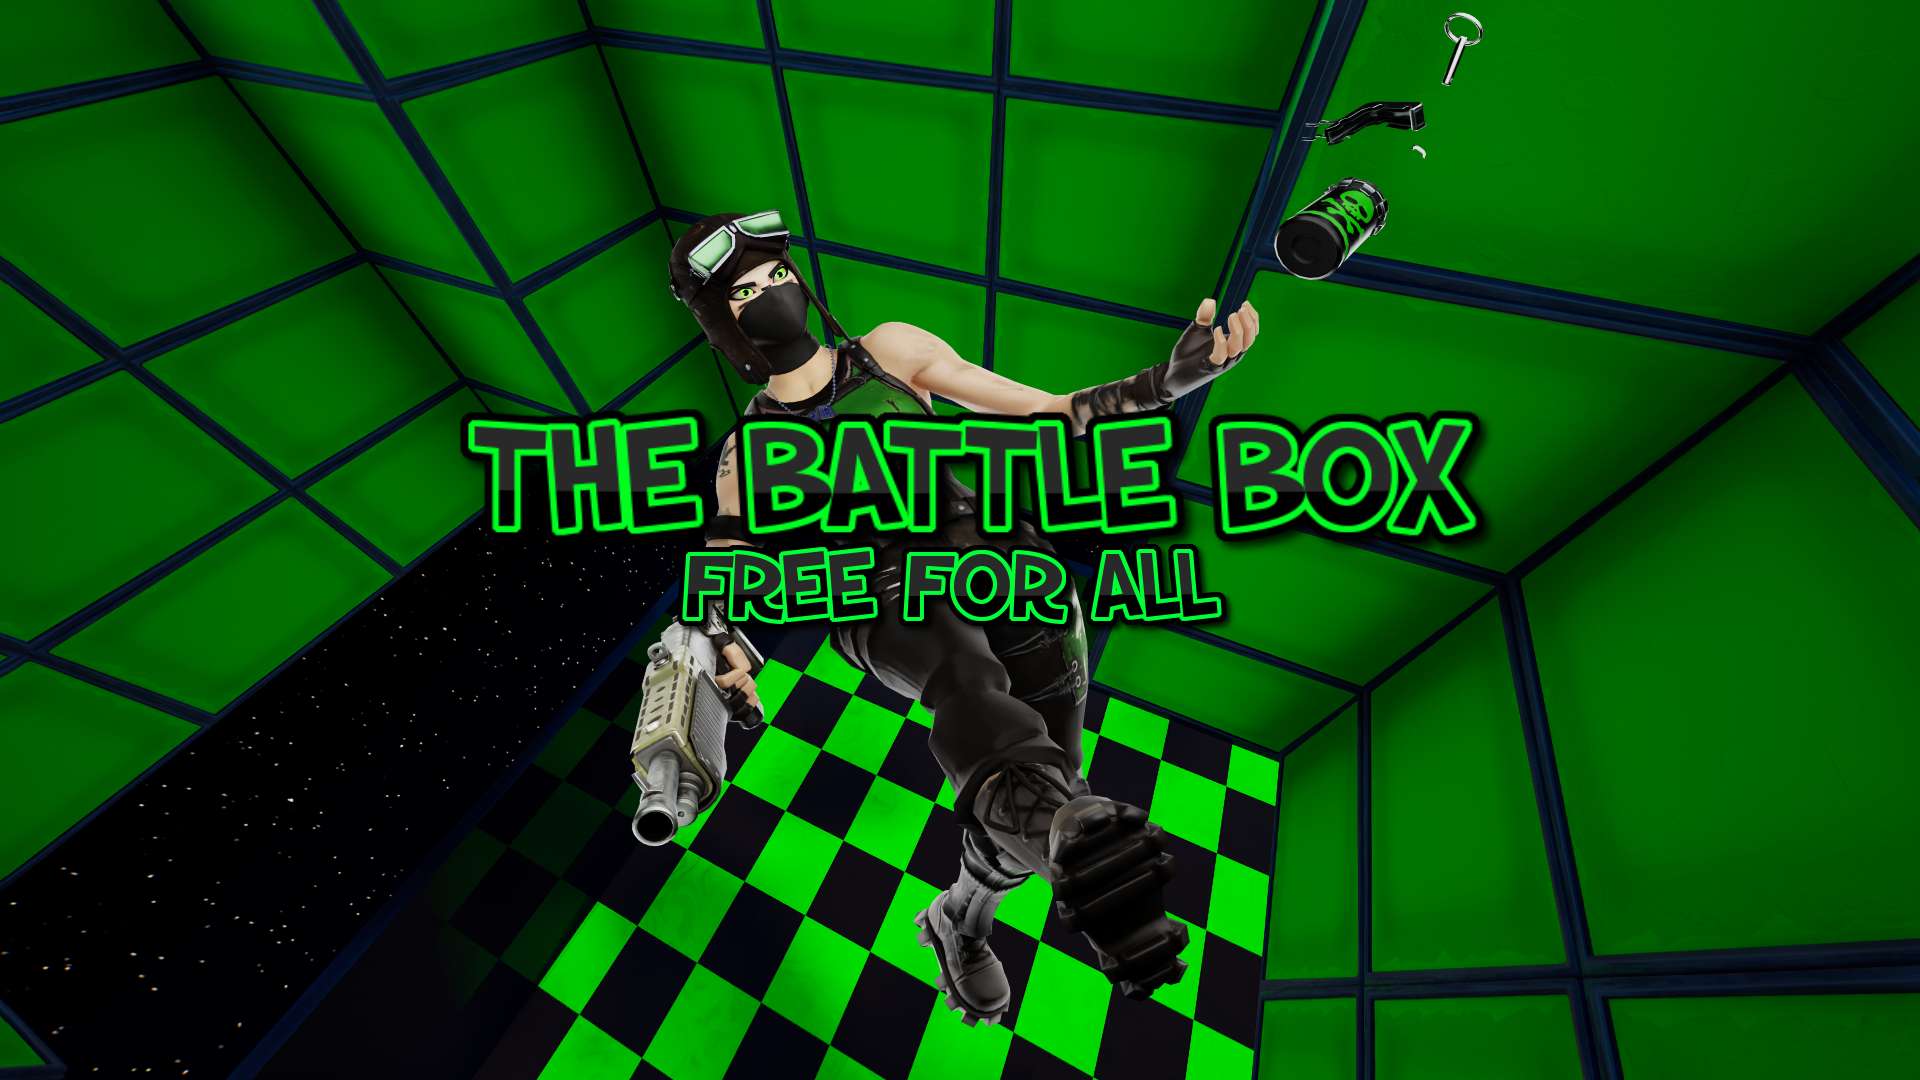 THE BATTLE BOX